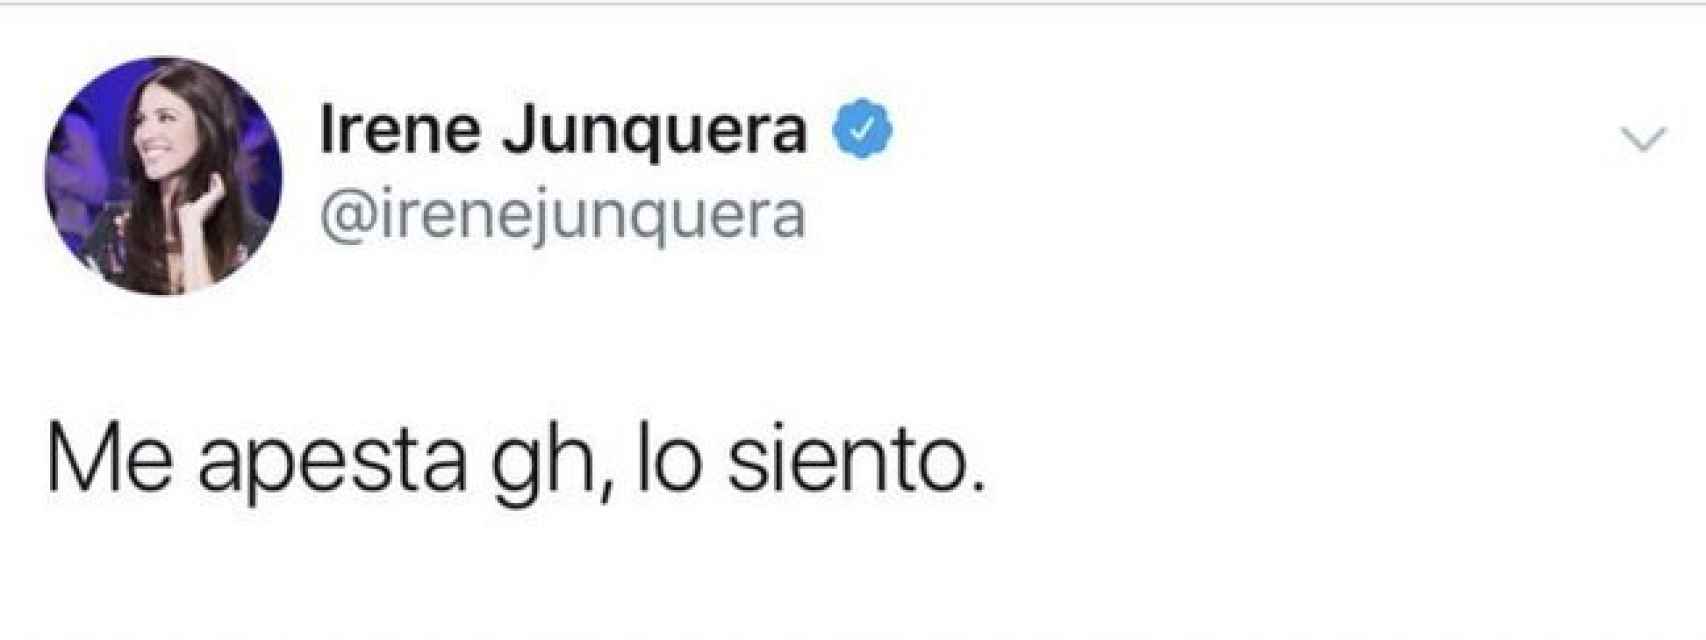 El polémico tuit de Irene Junquera